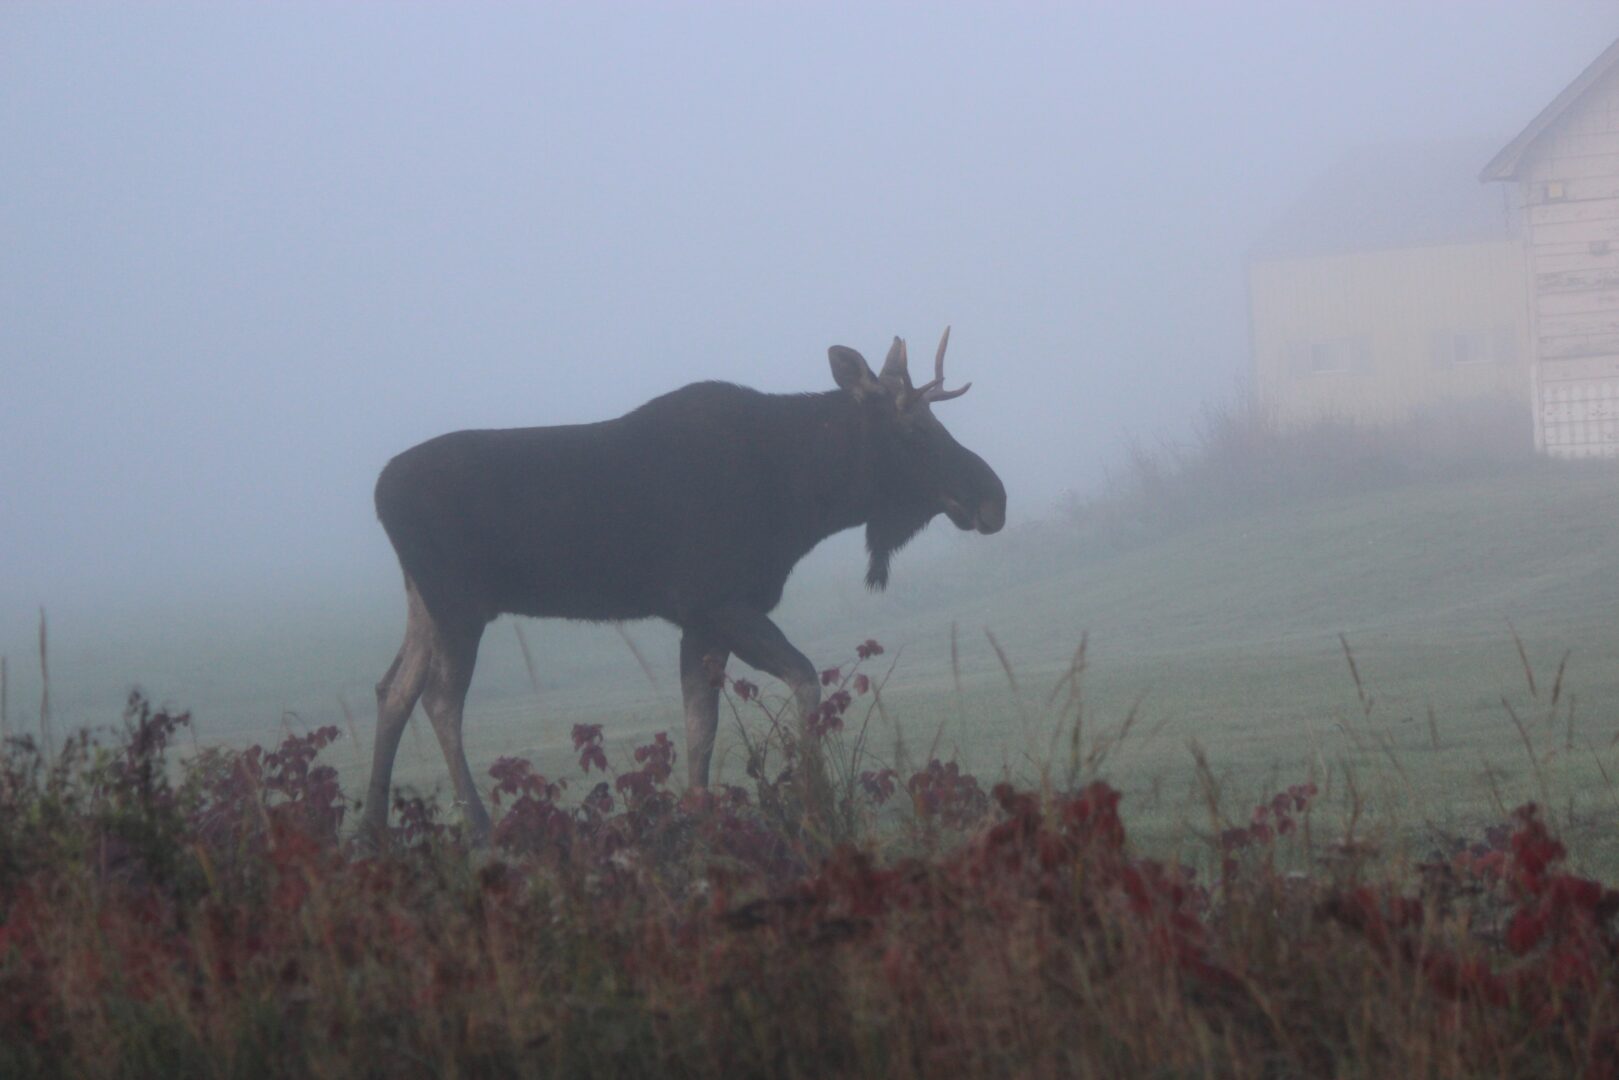 Image of a moose in mist